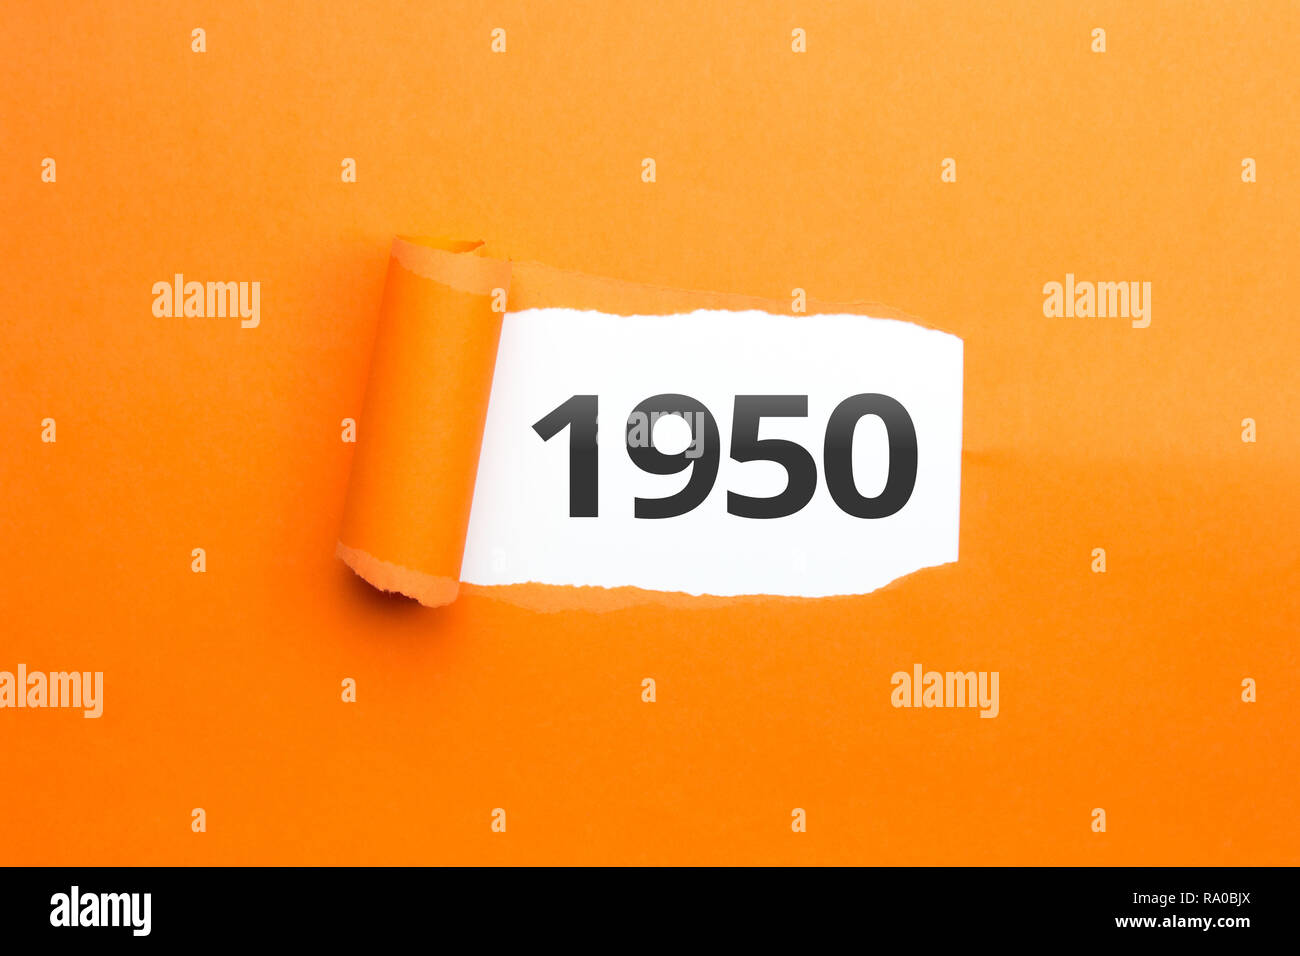 surprising Number / Year 1950 orange background Stock Photo